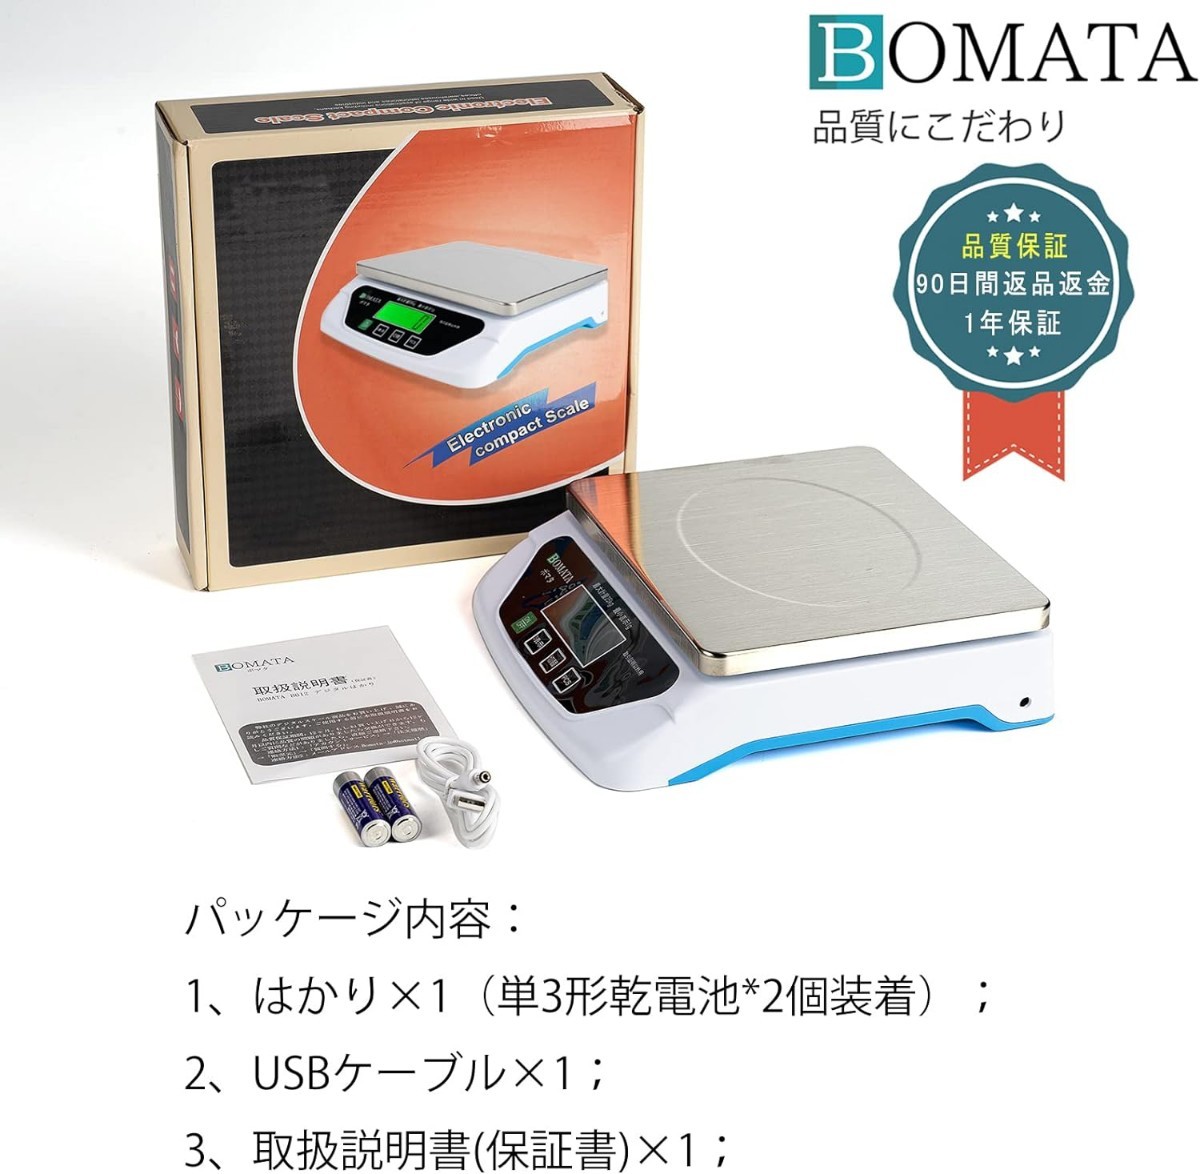 BOMATA(ボマタ) 台はかり 1g単位 50kg ステンレス製秤台 全視角LCD USB給電&乾電池 2式給電 風袋引き機能 計数機能 オートオフ機能_画像6